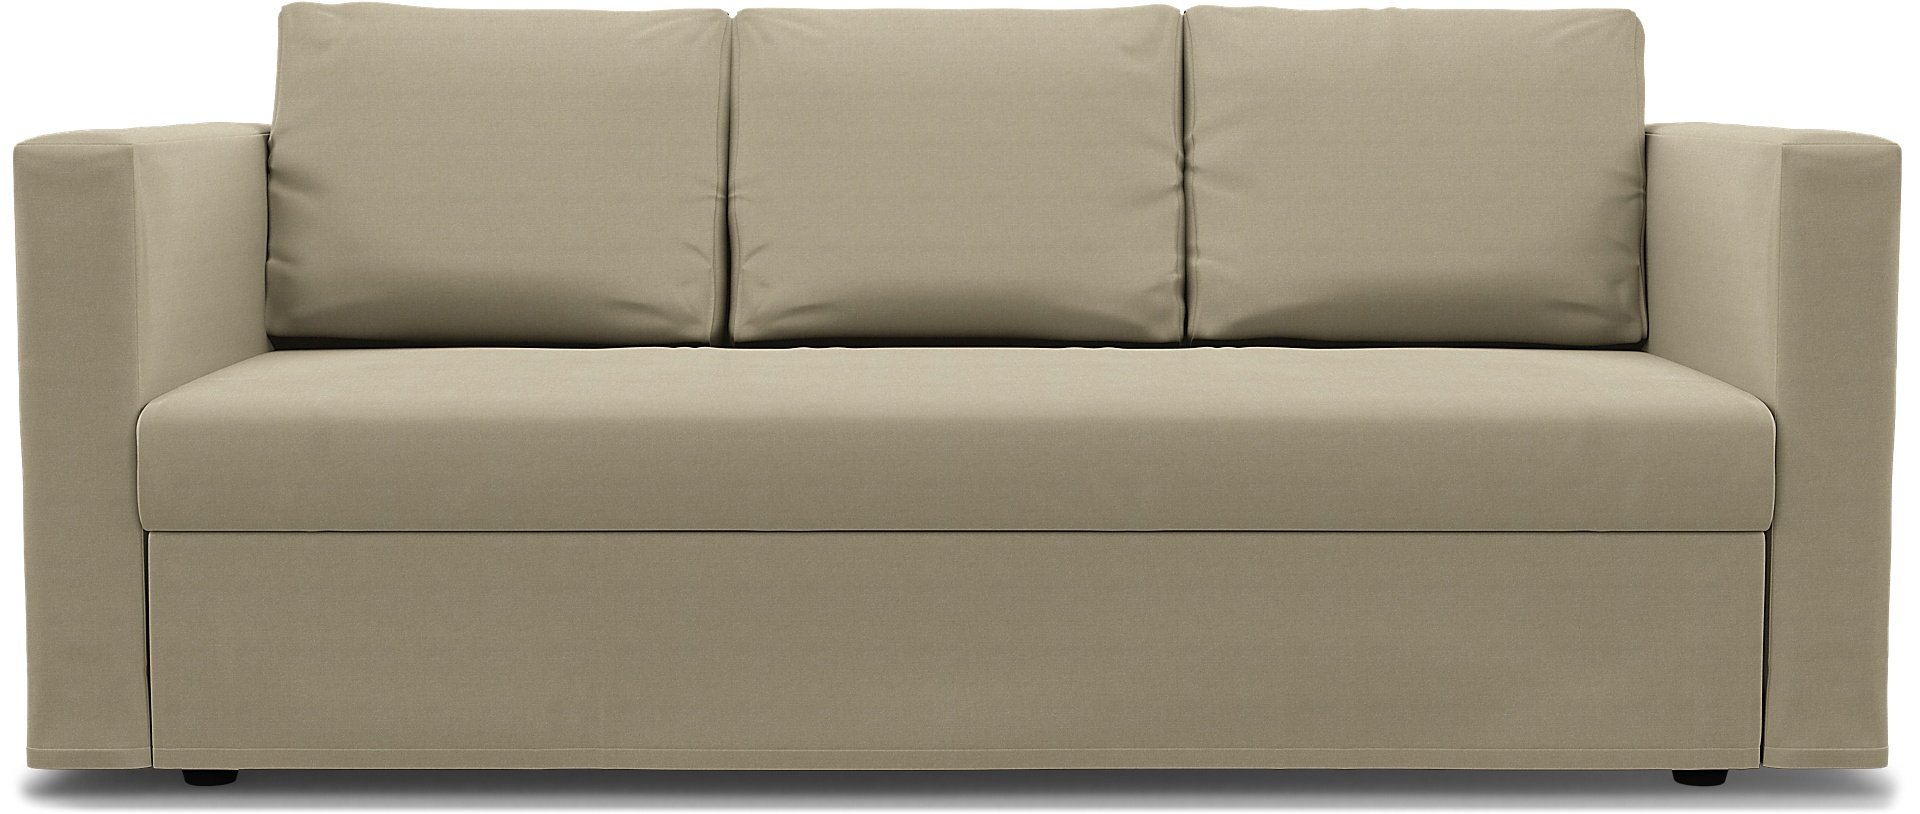 IKEA - Friheten 3 Seater Sofa Bed Cover, Tan, Linen - Bemz